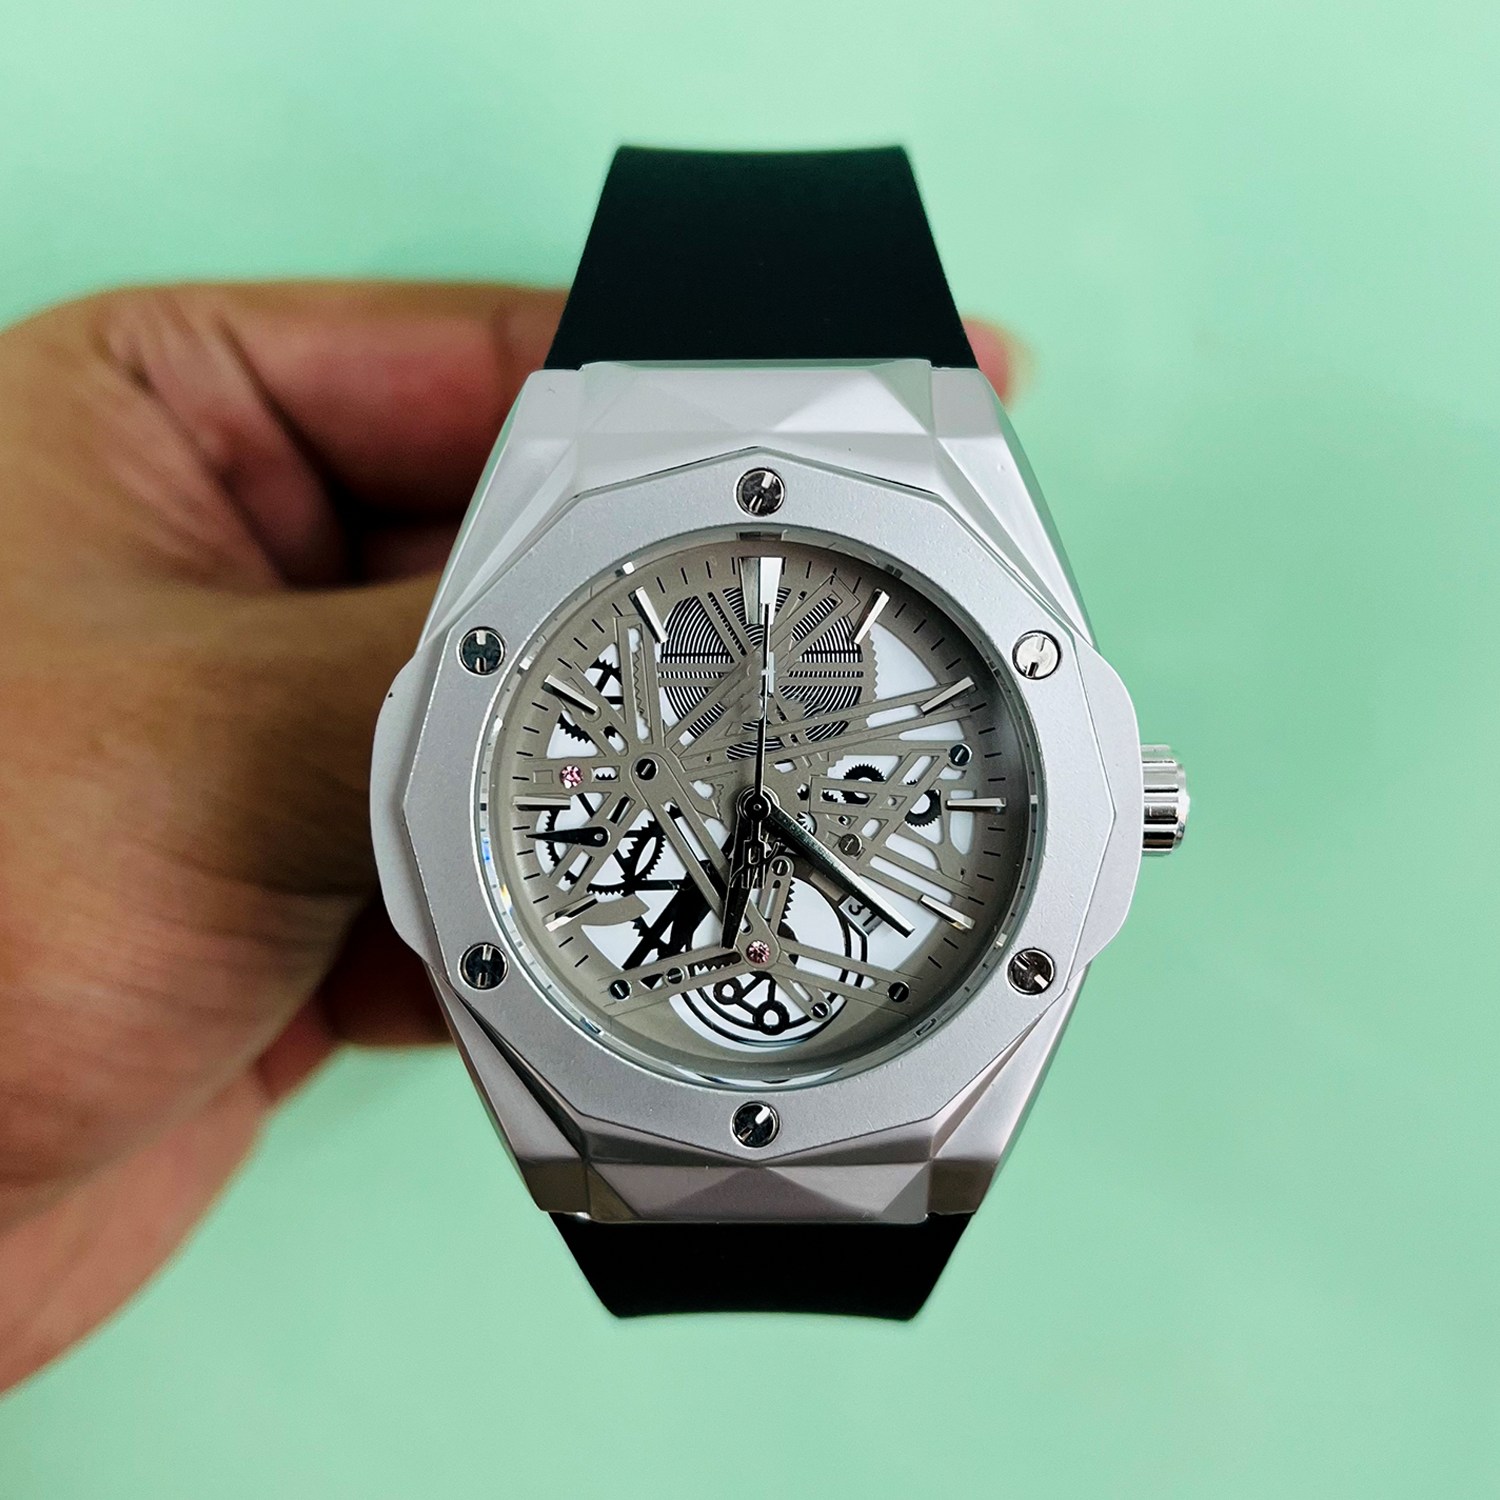 HBLT Premium Big Dial Men's Wrist Watch